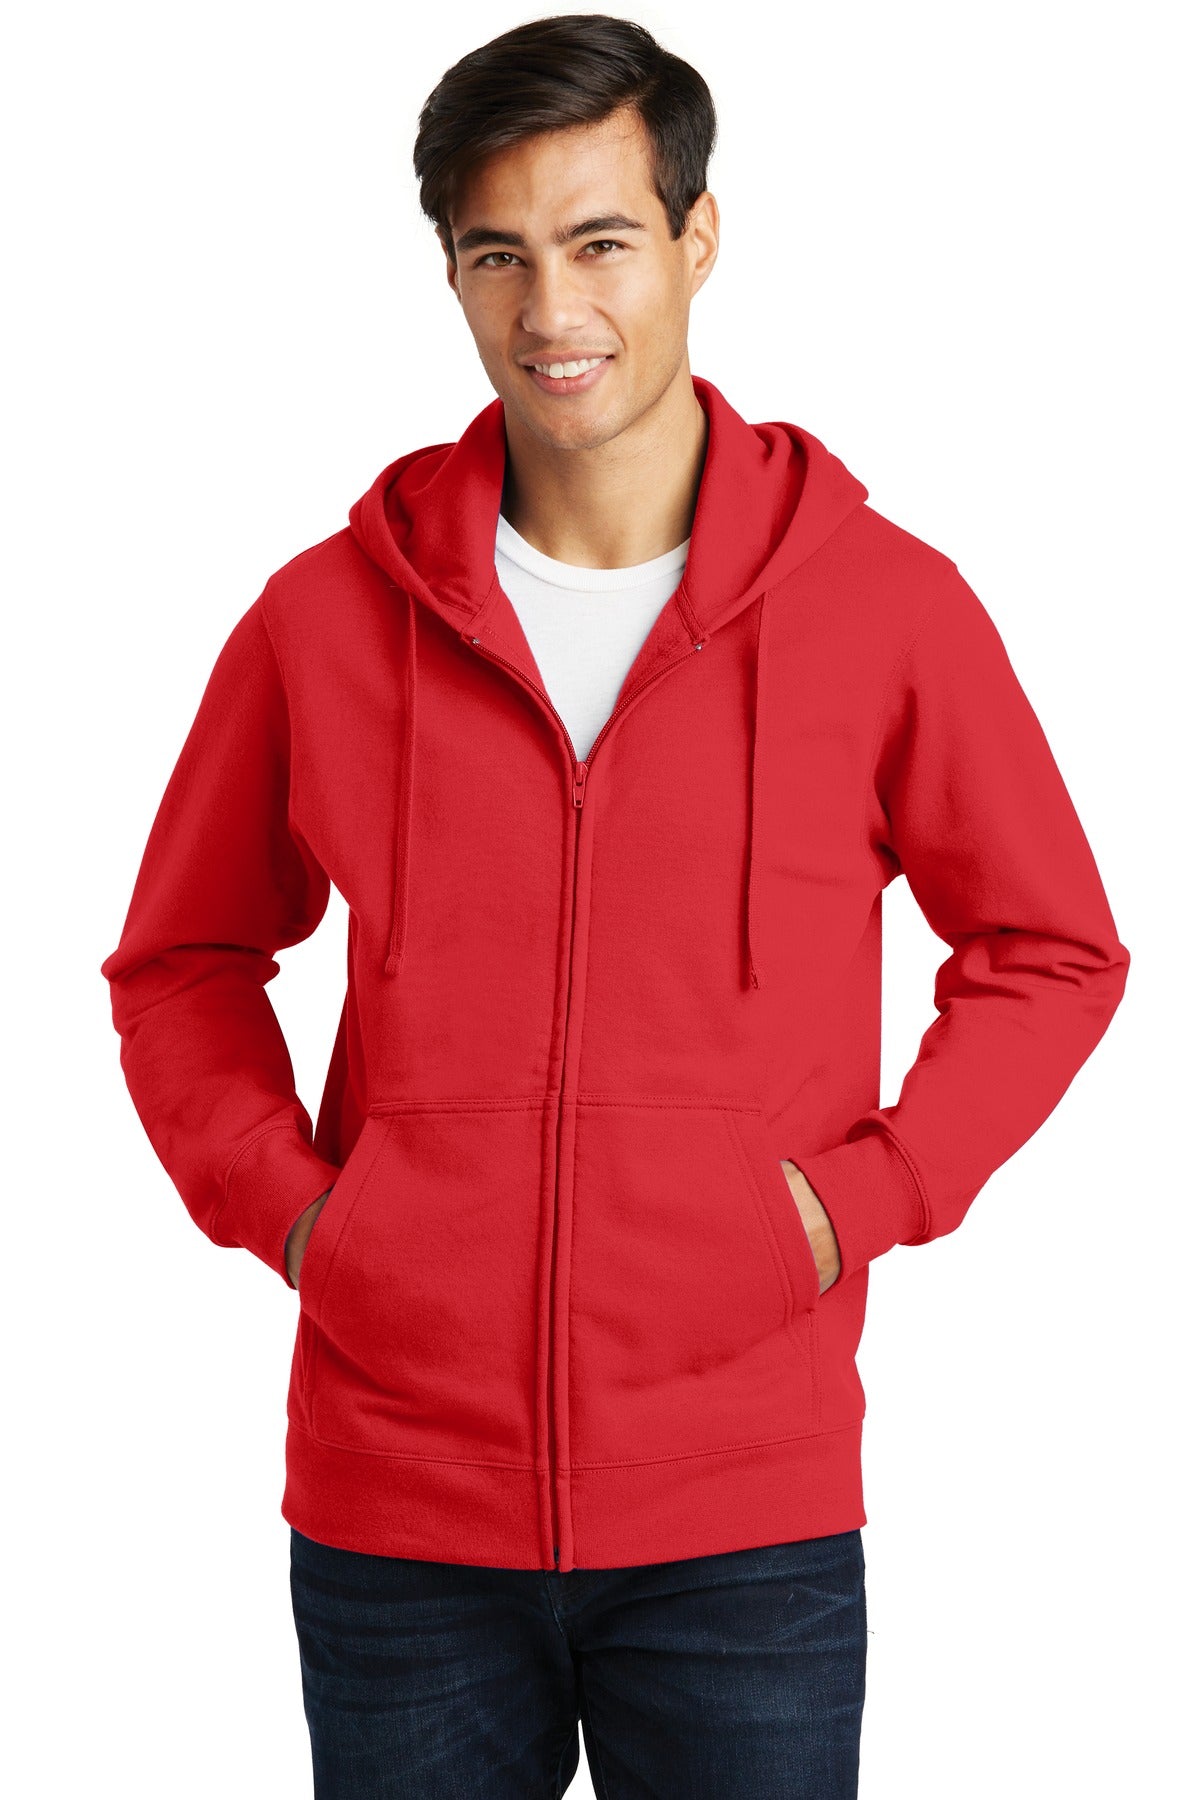 Sweatshirts/Fleece Bright Red Port & Company